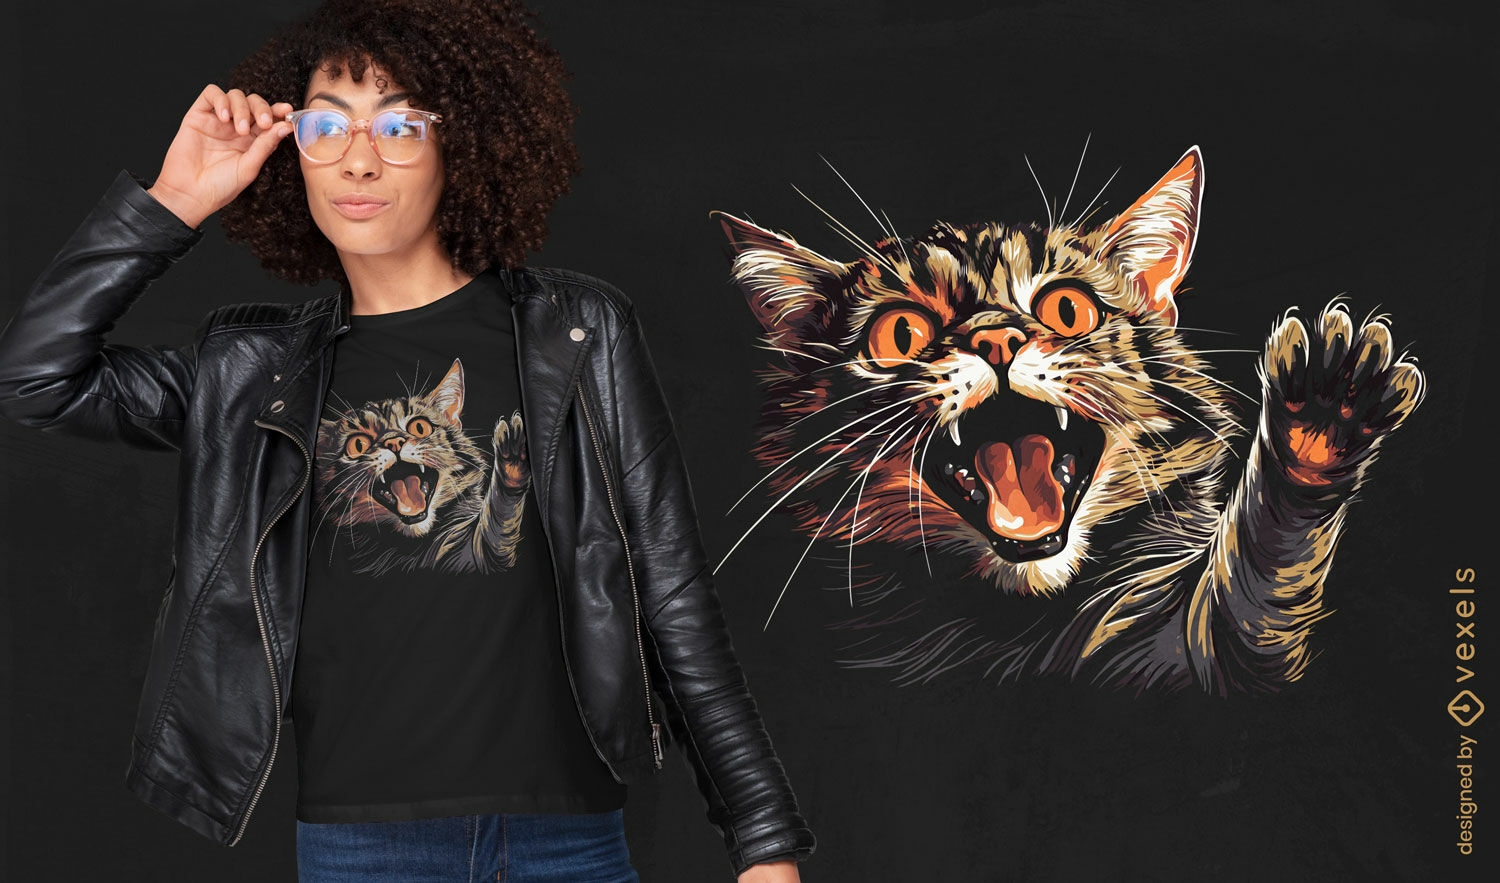 Dise?o de camiseta con ilustraci?n de gatito enojado.